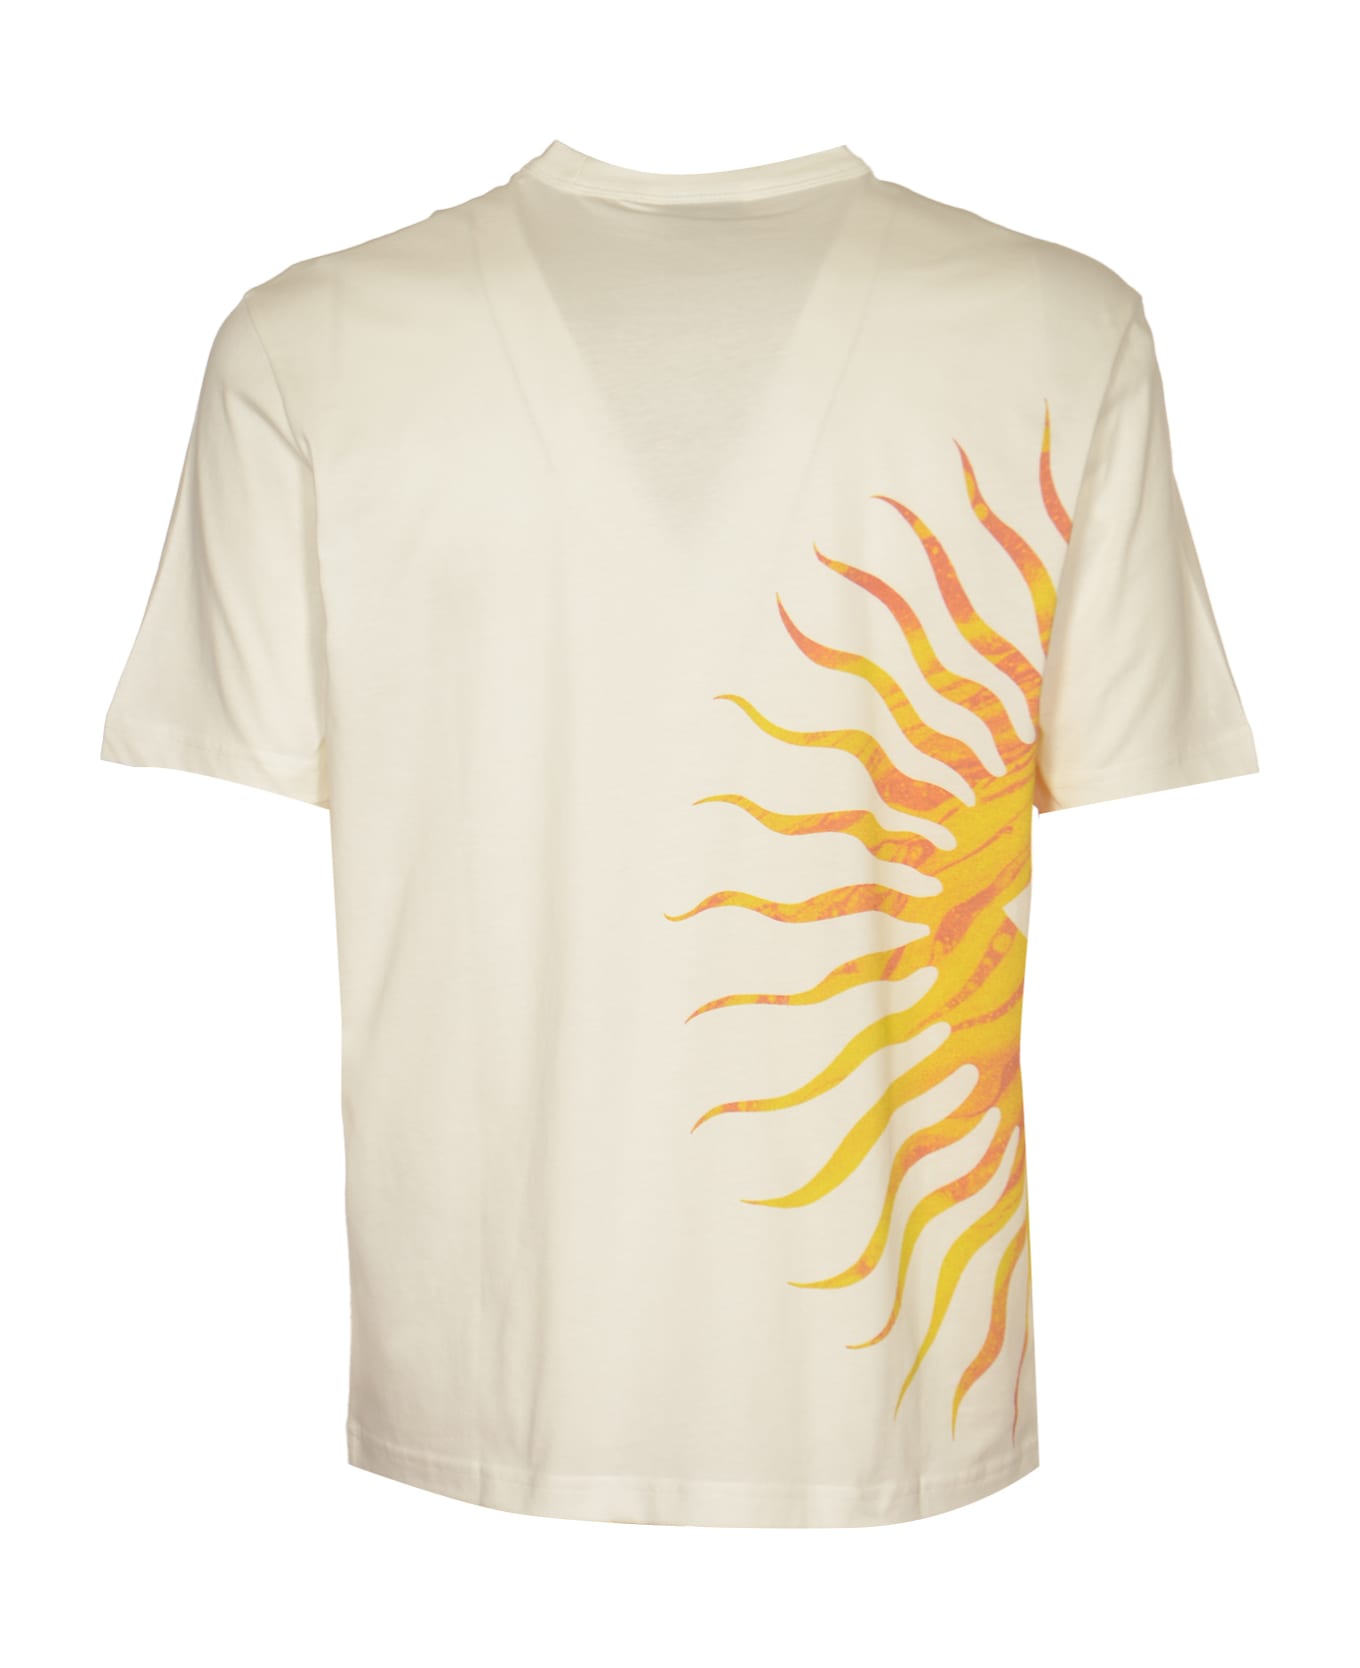 Paul Smith Sunnyside T-shirt - White